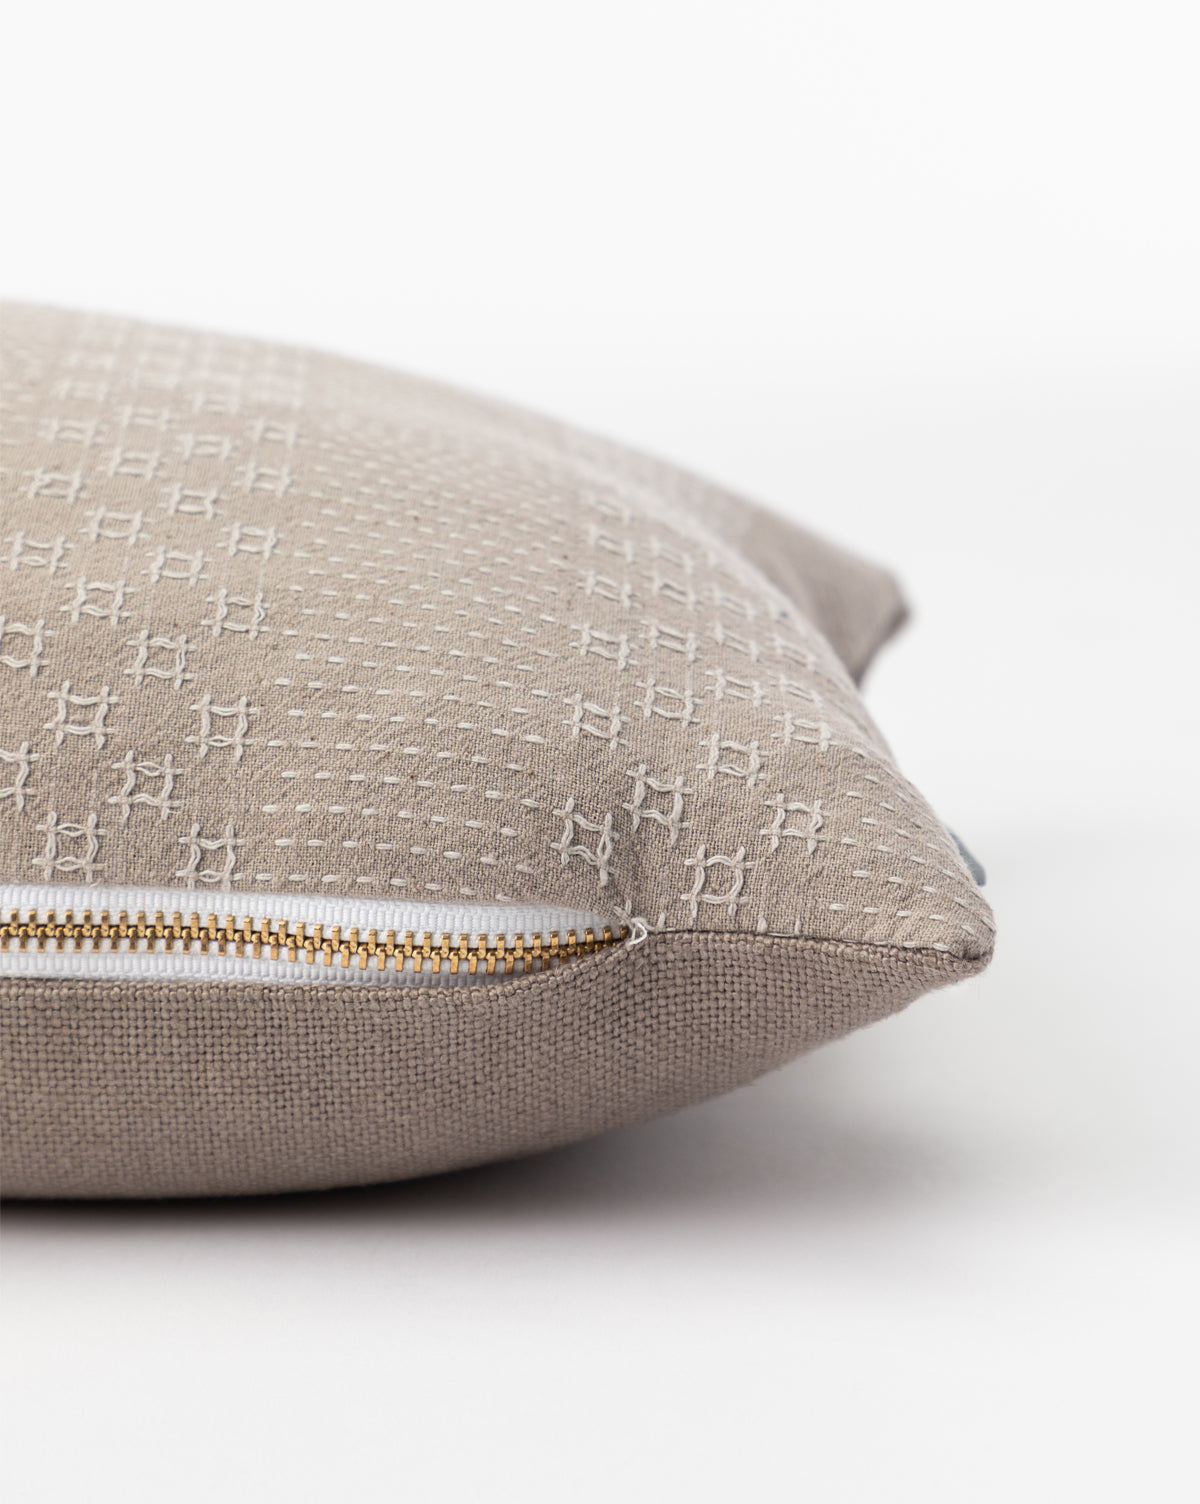 Tangren, Vintage Gray Crosshatch Pillow Cover No. 5